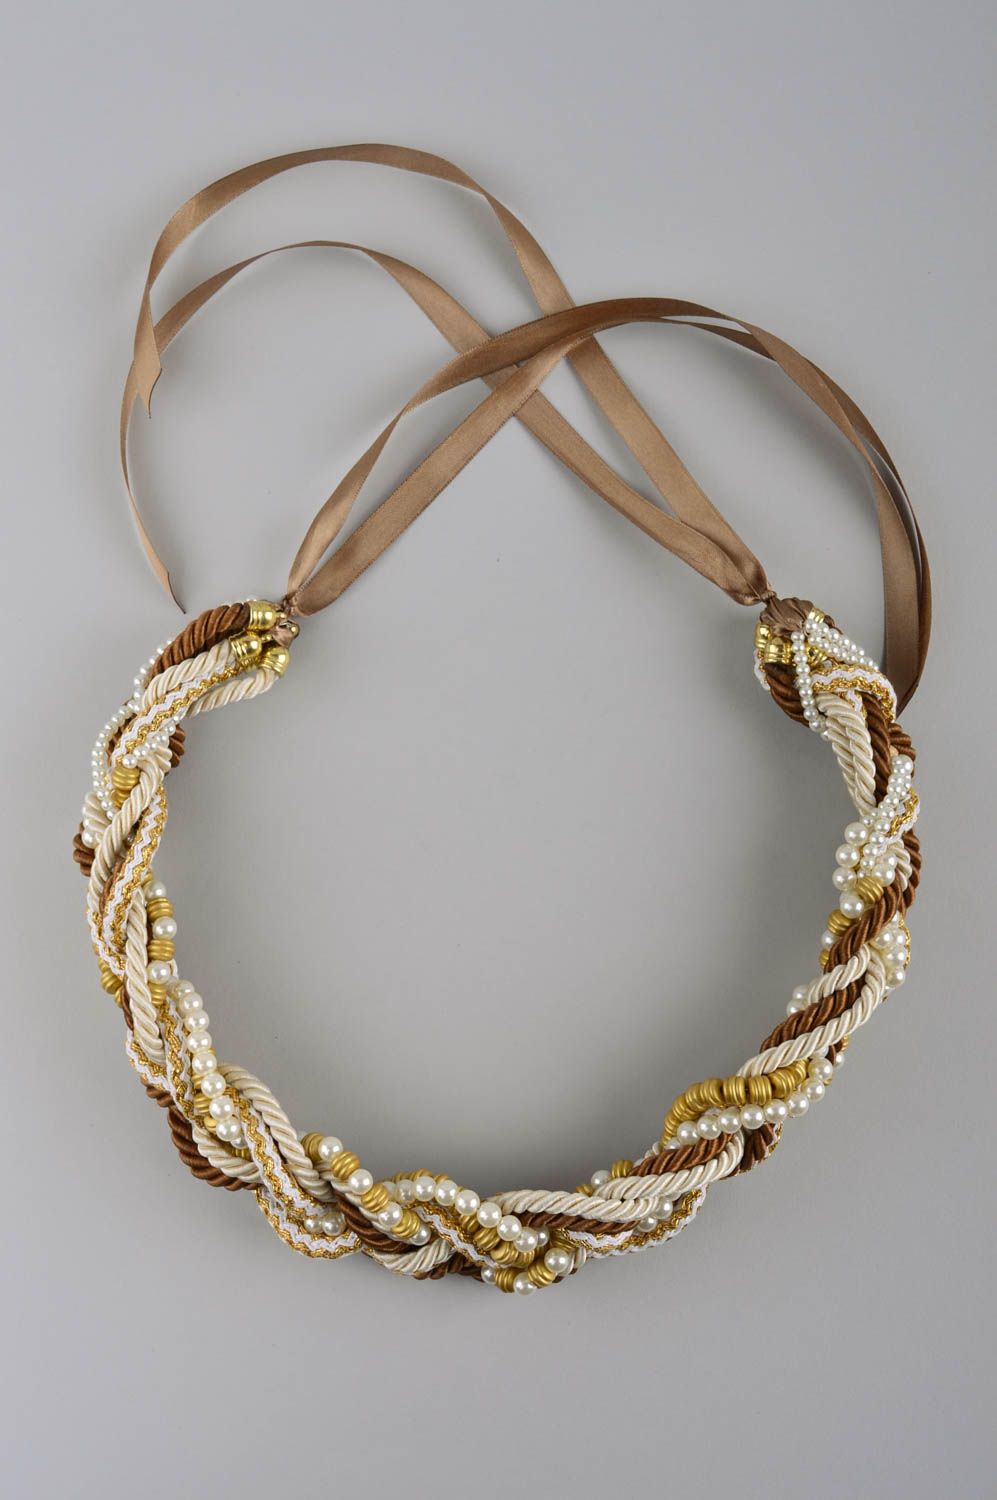 Designer lovely necklace unusual accessory for girls handmade stylish jewelry photo 5